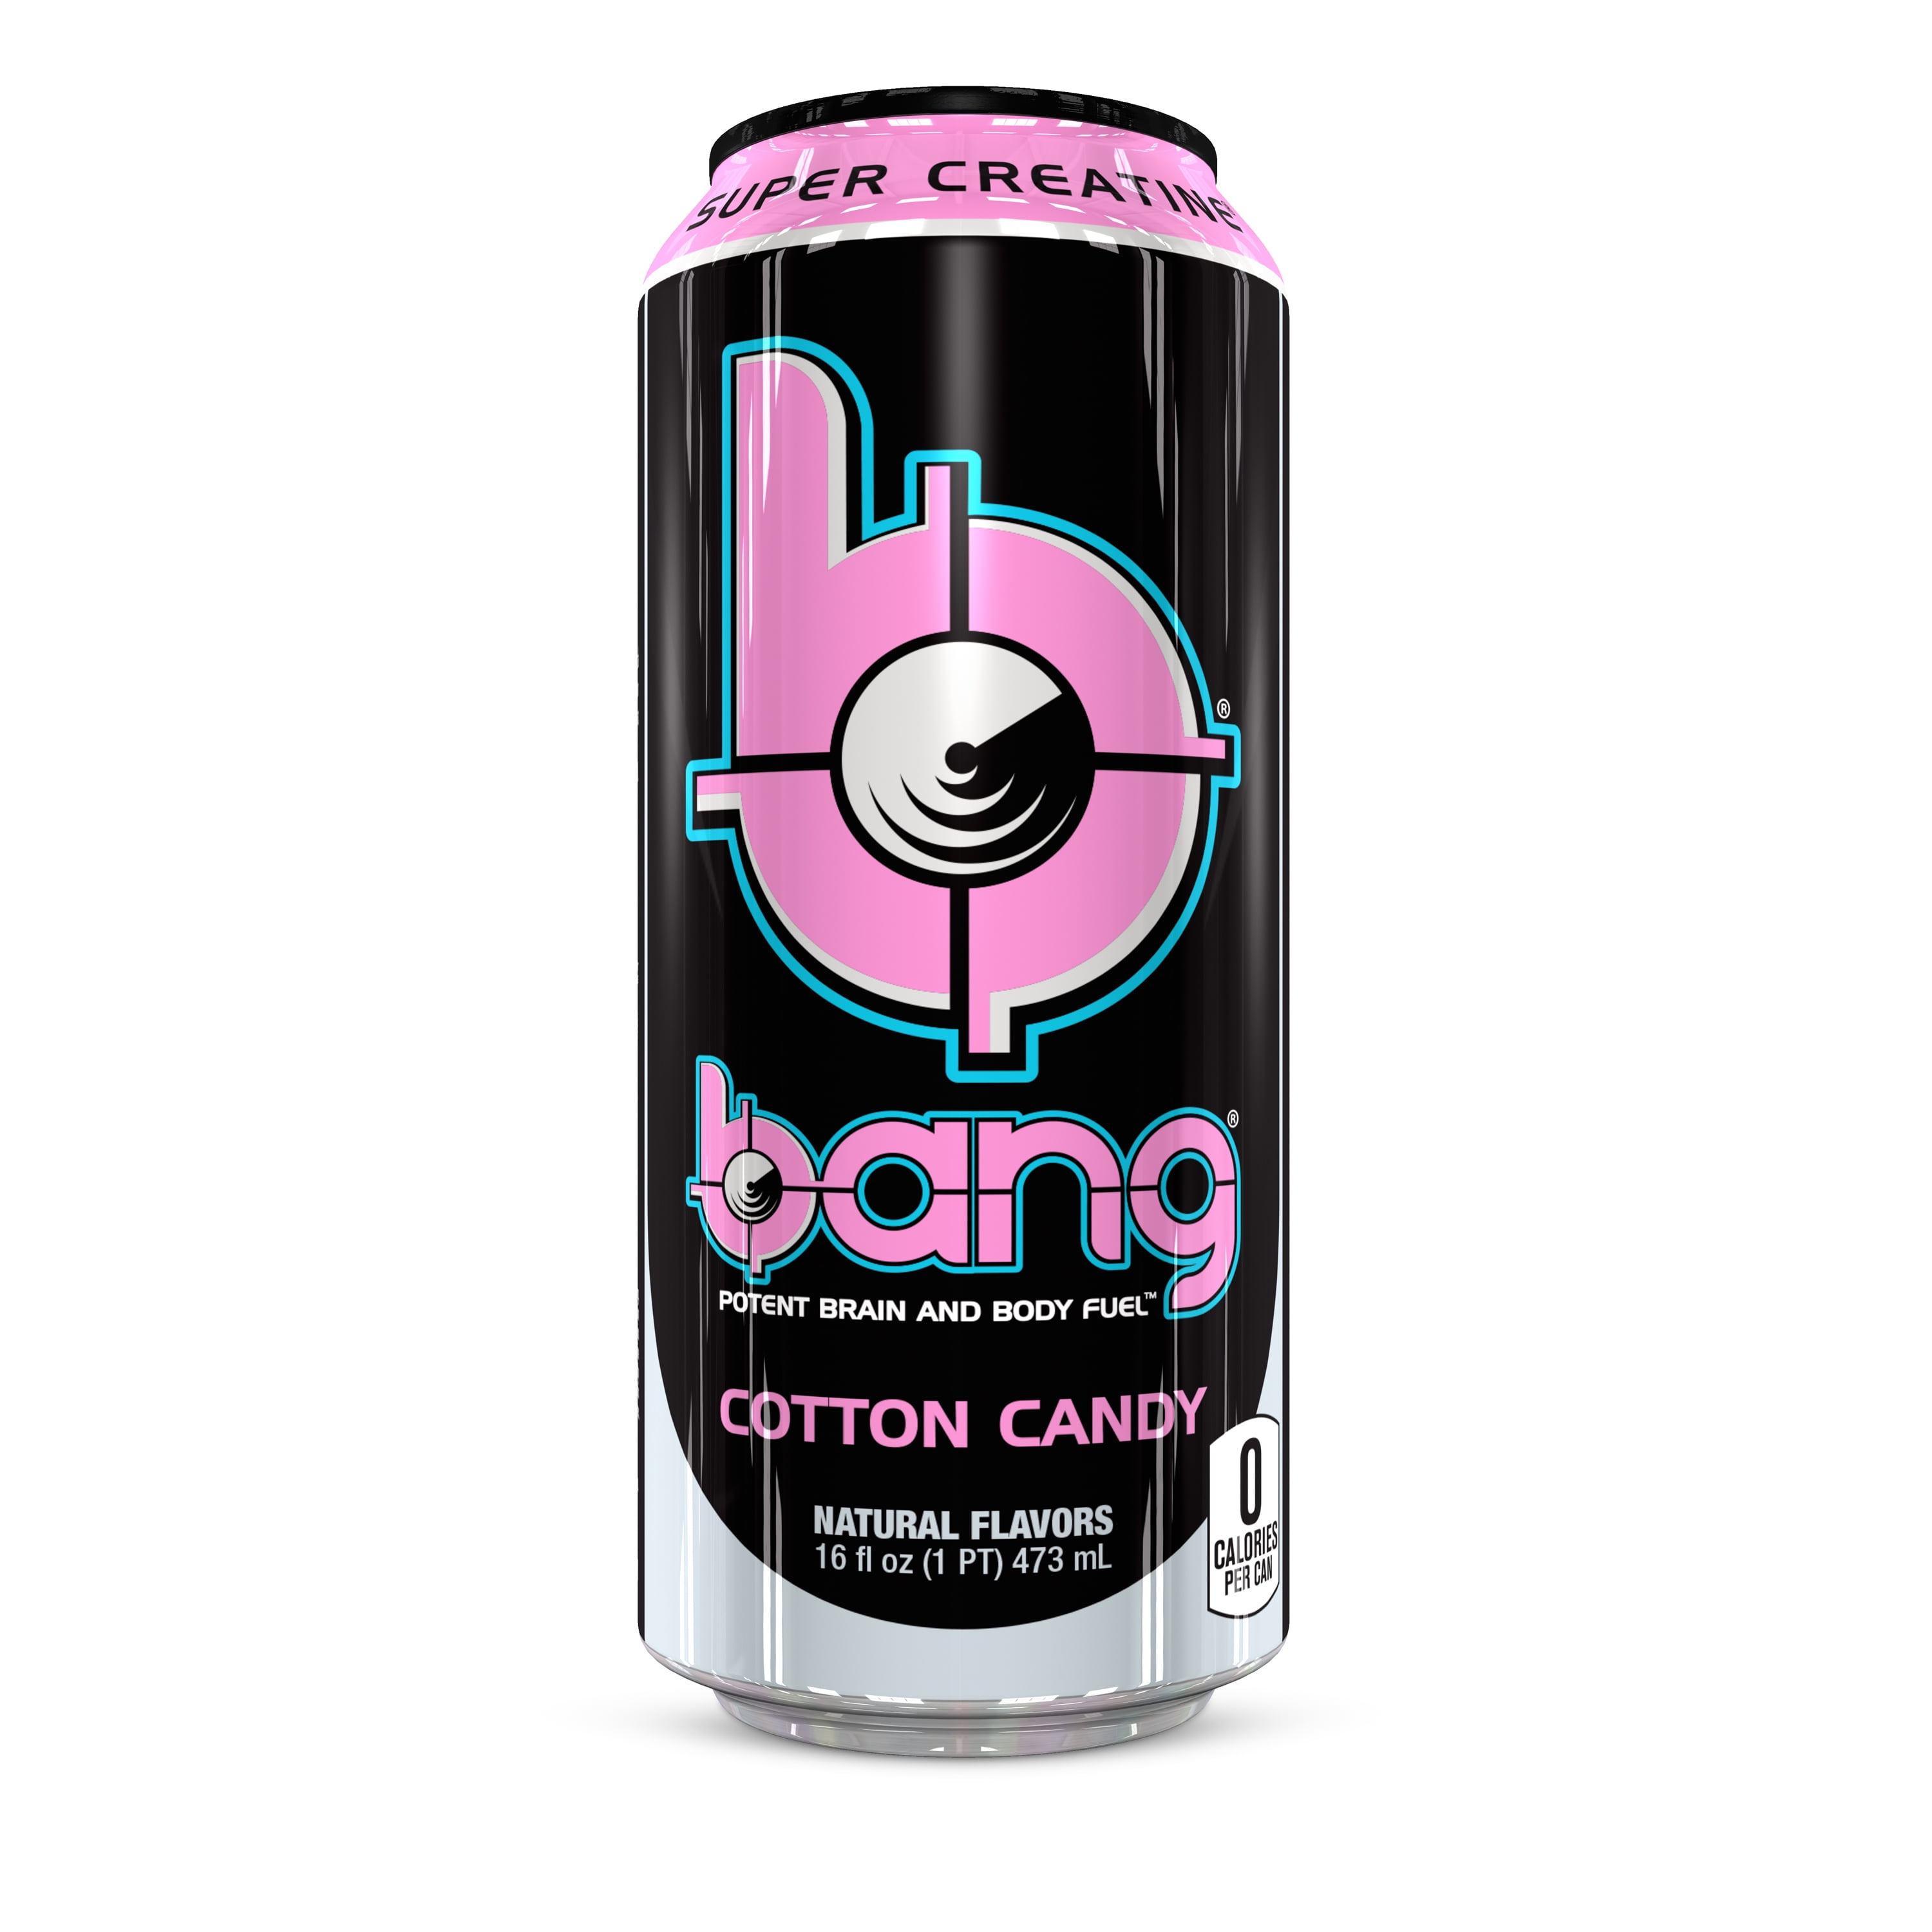 Bang Cotton Candy Energy Drink With Super Creatine 16 Oz Can Walmart Com Walmart Com